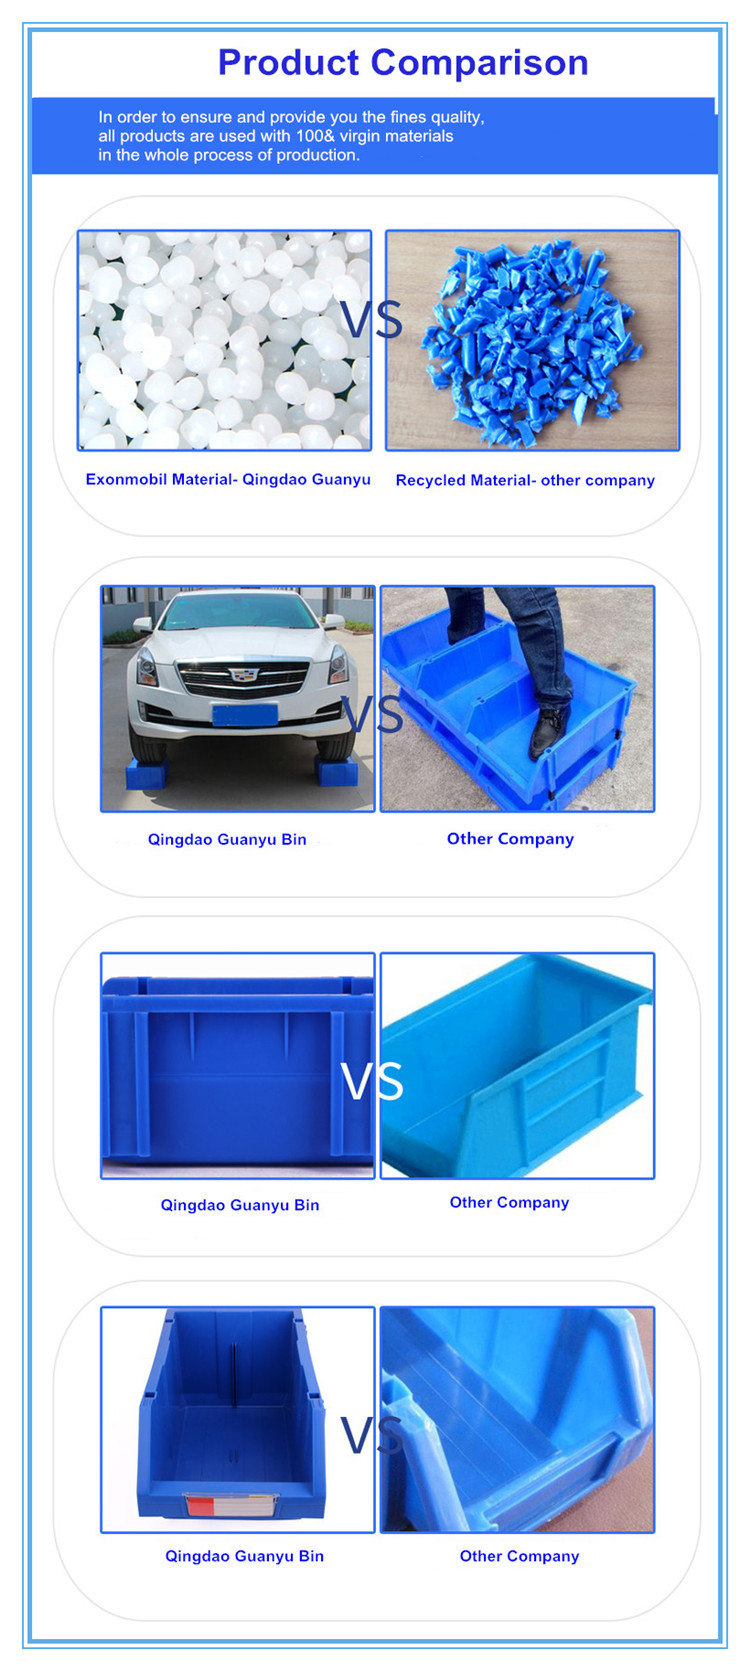 Industrial Warehouse Plastic Shelf Bin for Vertical Storage Automatic (PK001)